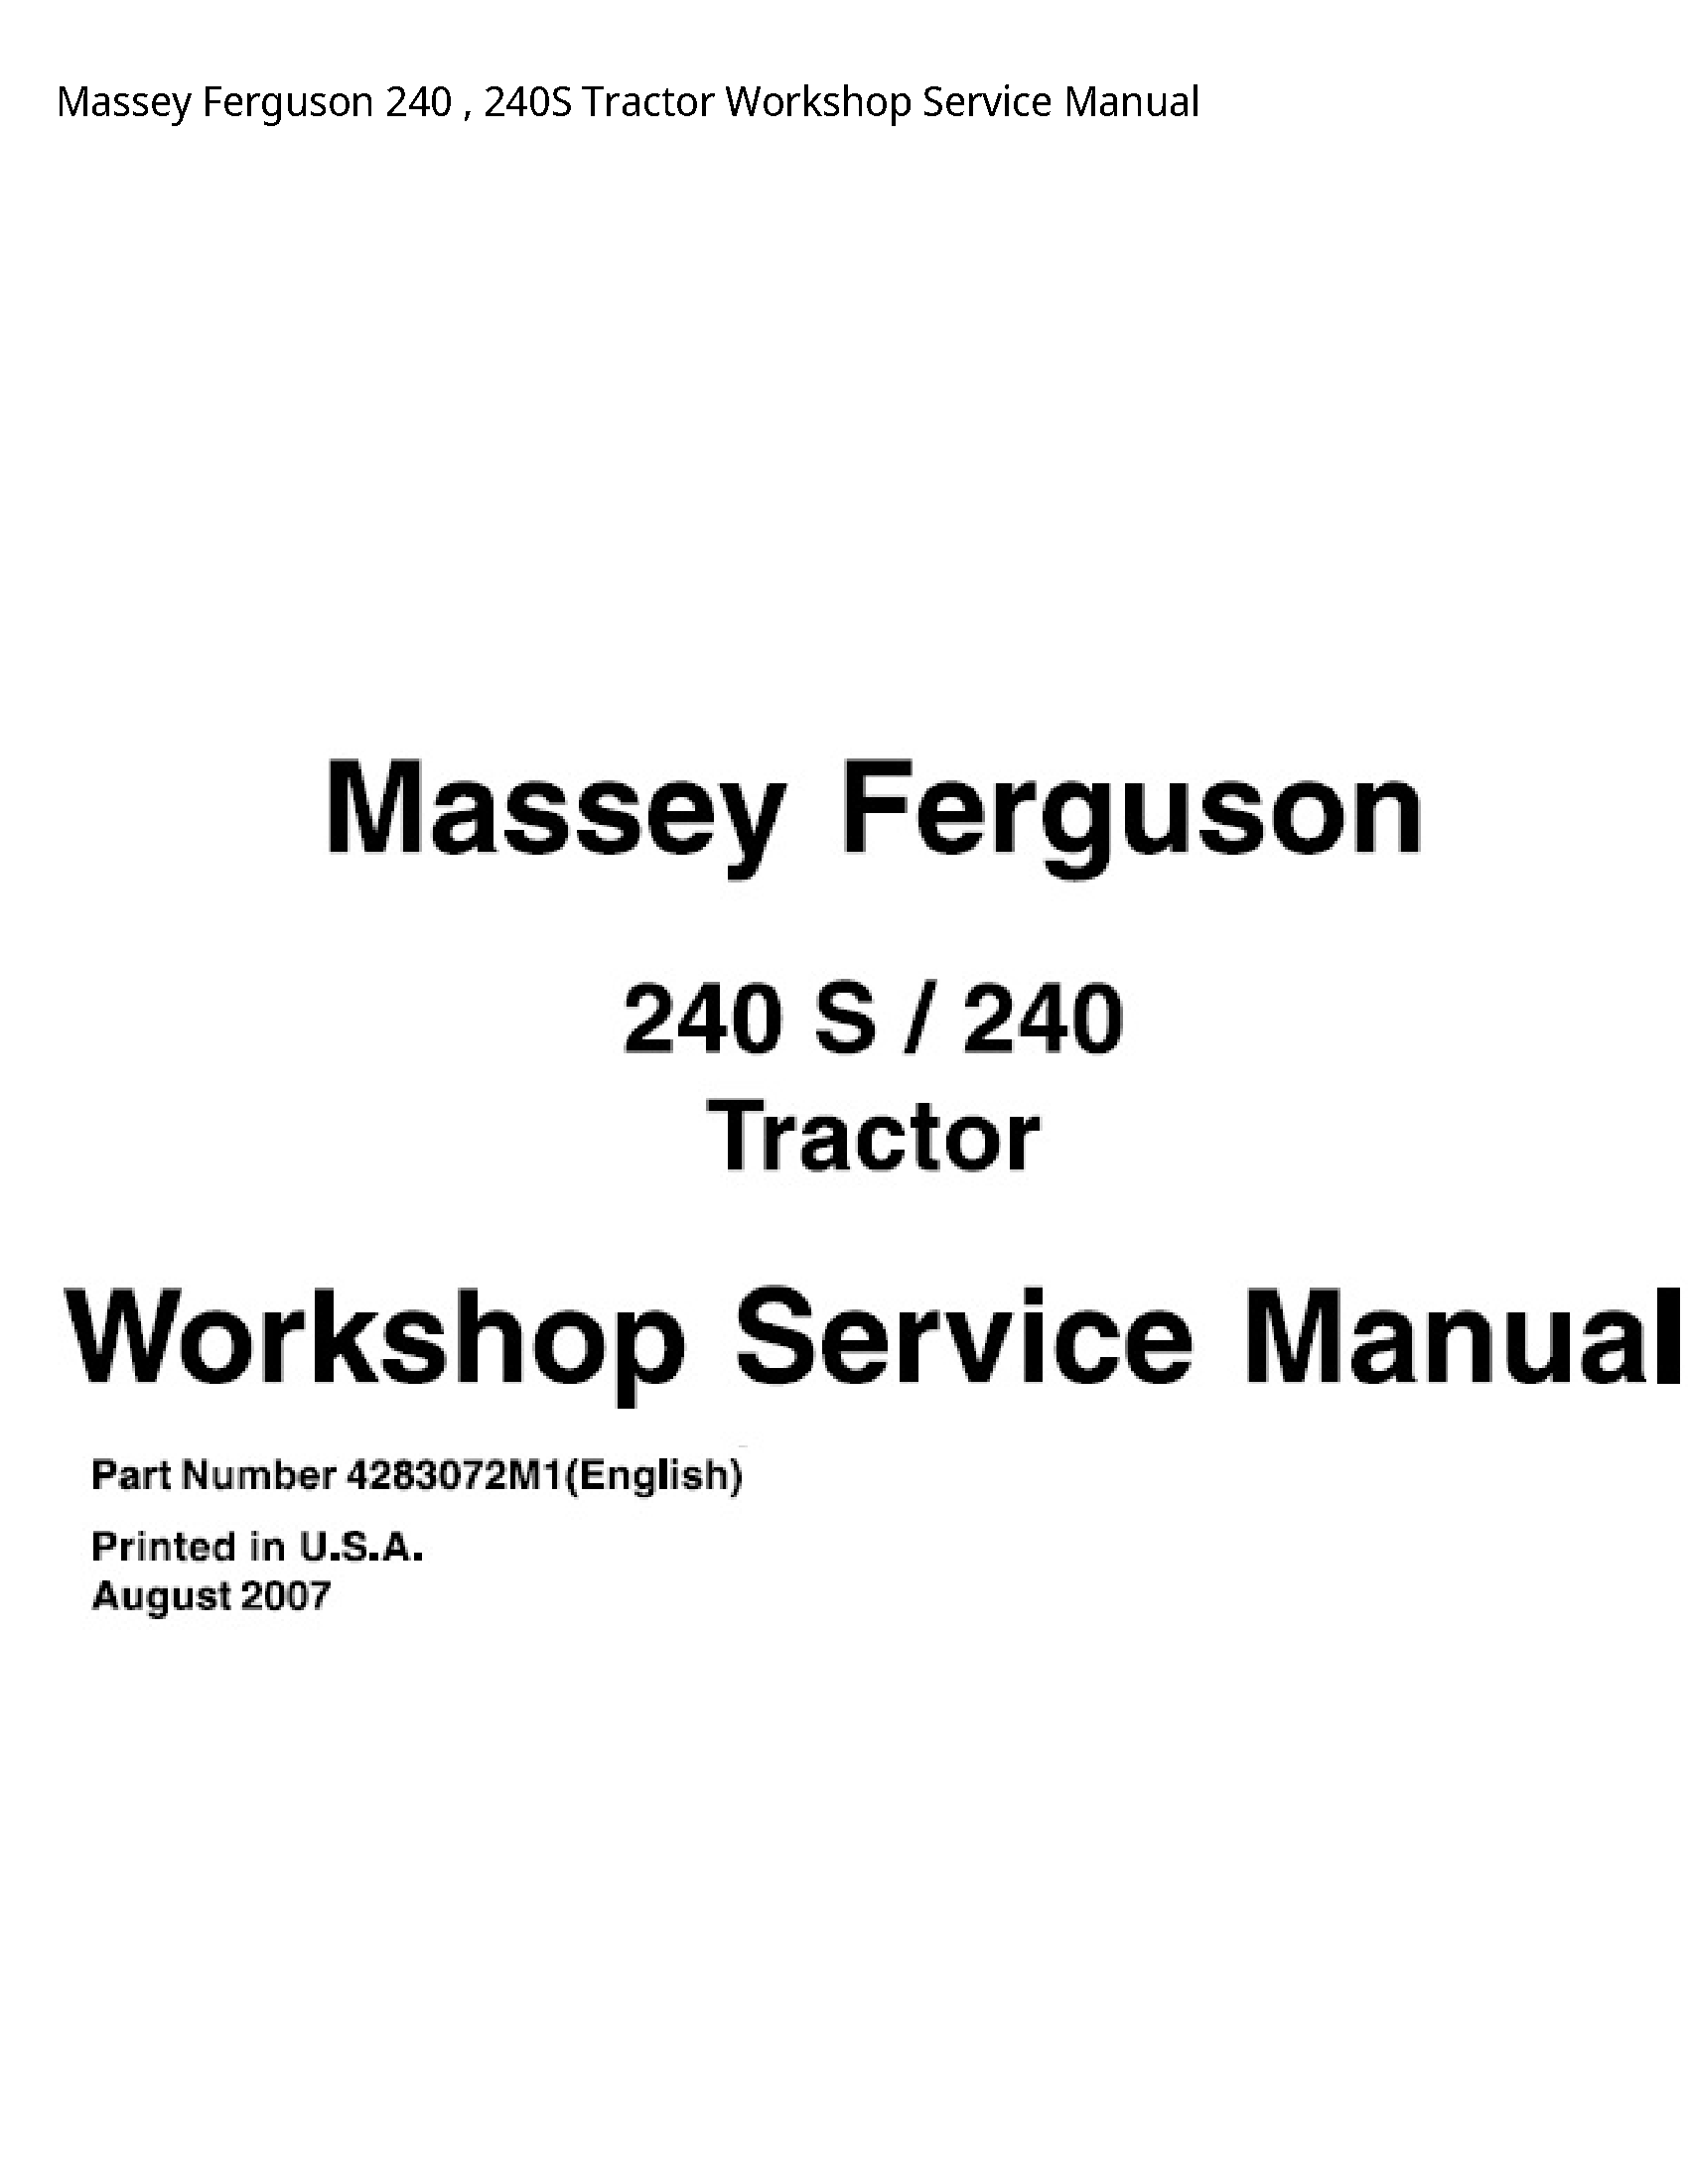 Massey Ferguson 240 Tractor Service manual